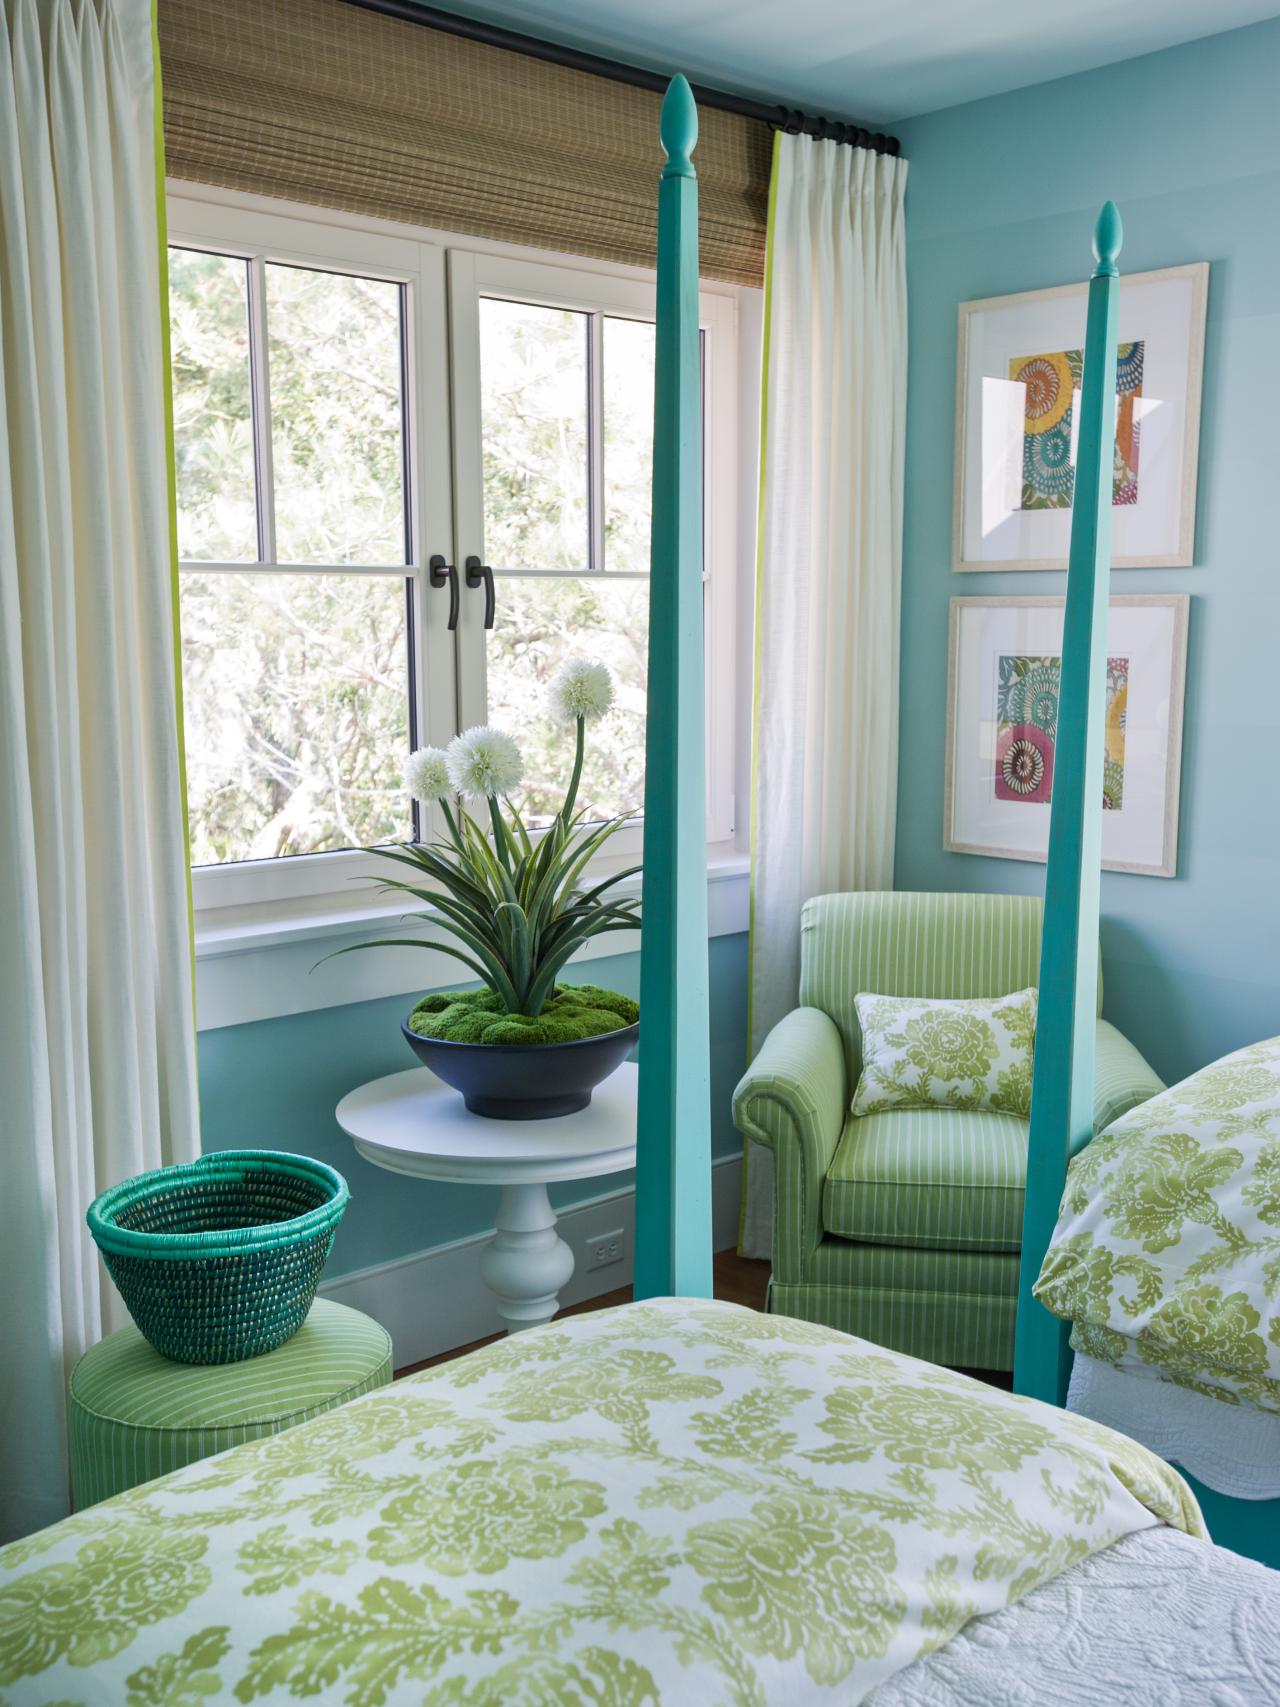 green and blue decorating - via HGTV Dream Home 2013 - bedroom